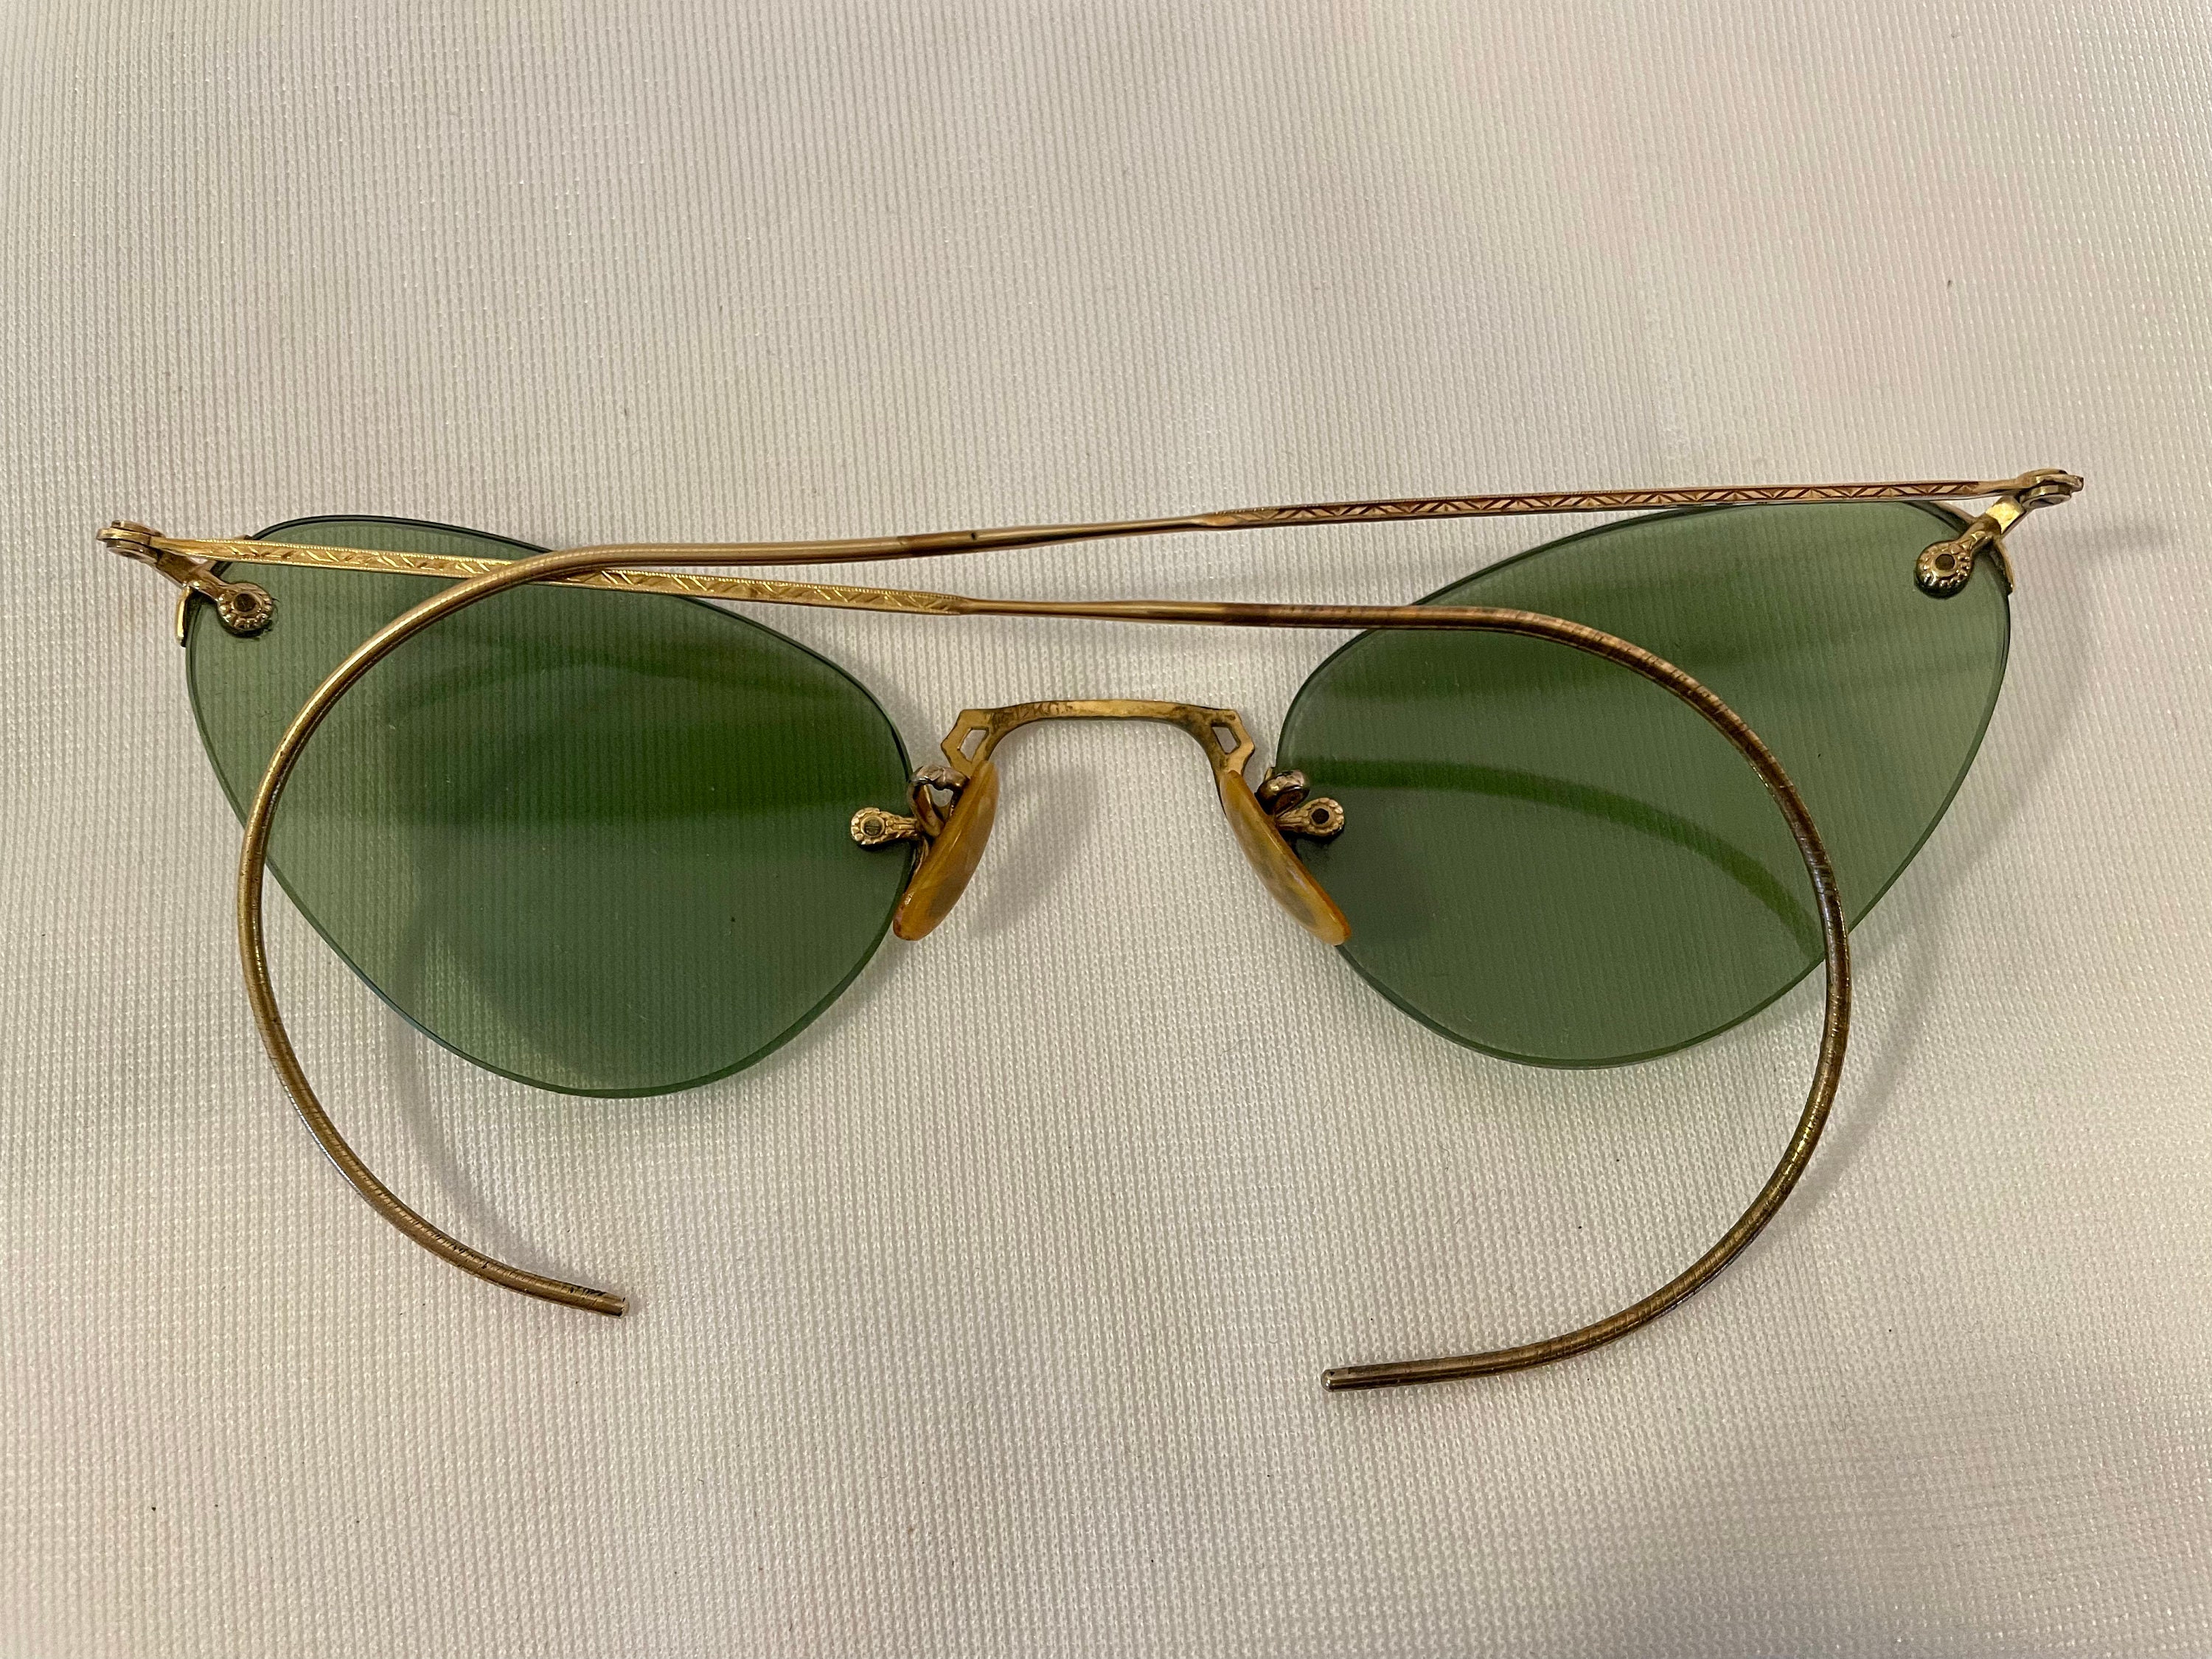 12k gold filled wire frames Accessoires Zonnebrillen & Eyewear Zonnebrillen The Best Cat Eye Antique Sunglasses 